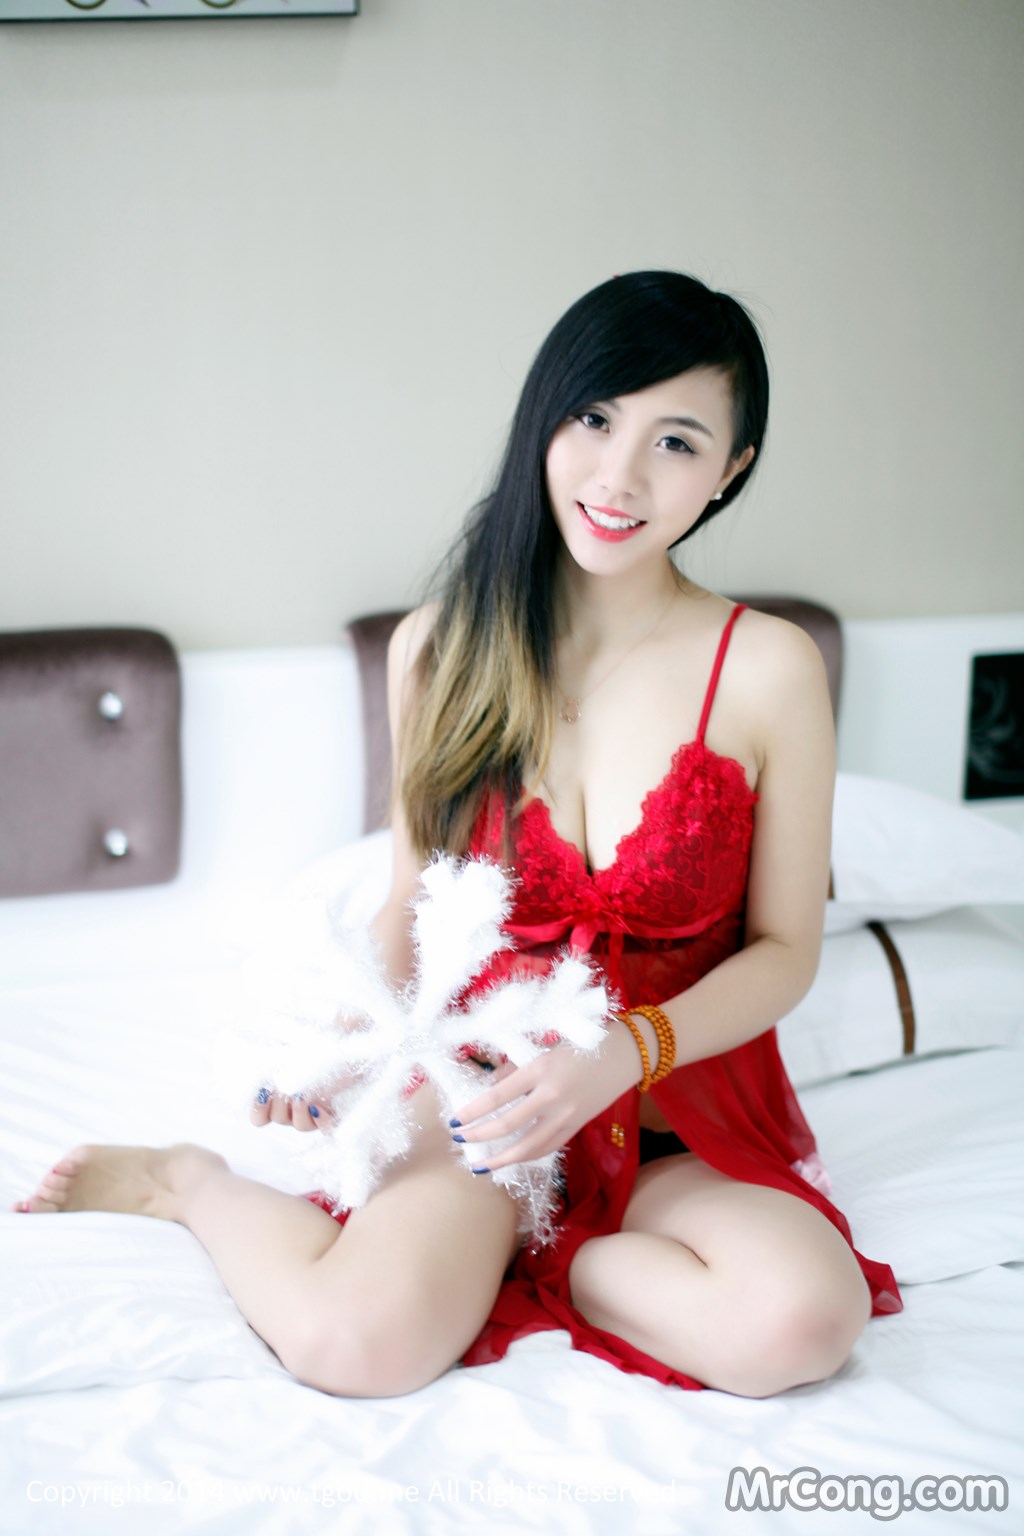 TGOD 2014-12-23: Model Xie Chen Zhuo (谢忱 倬) (134 photos)